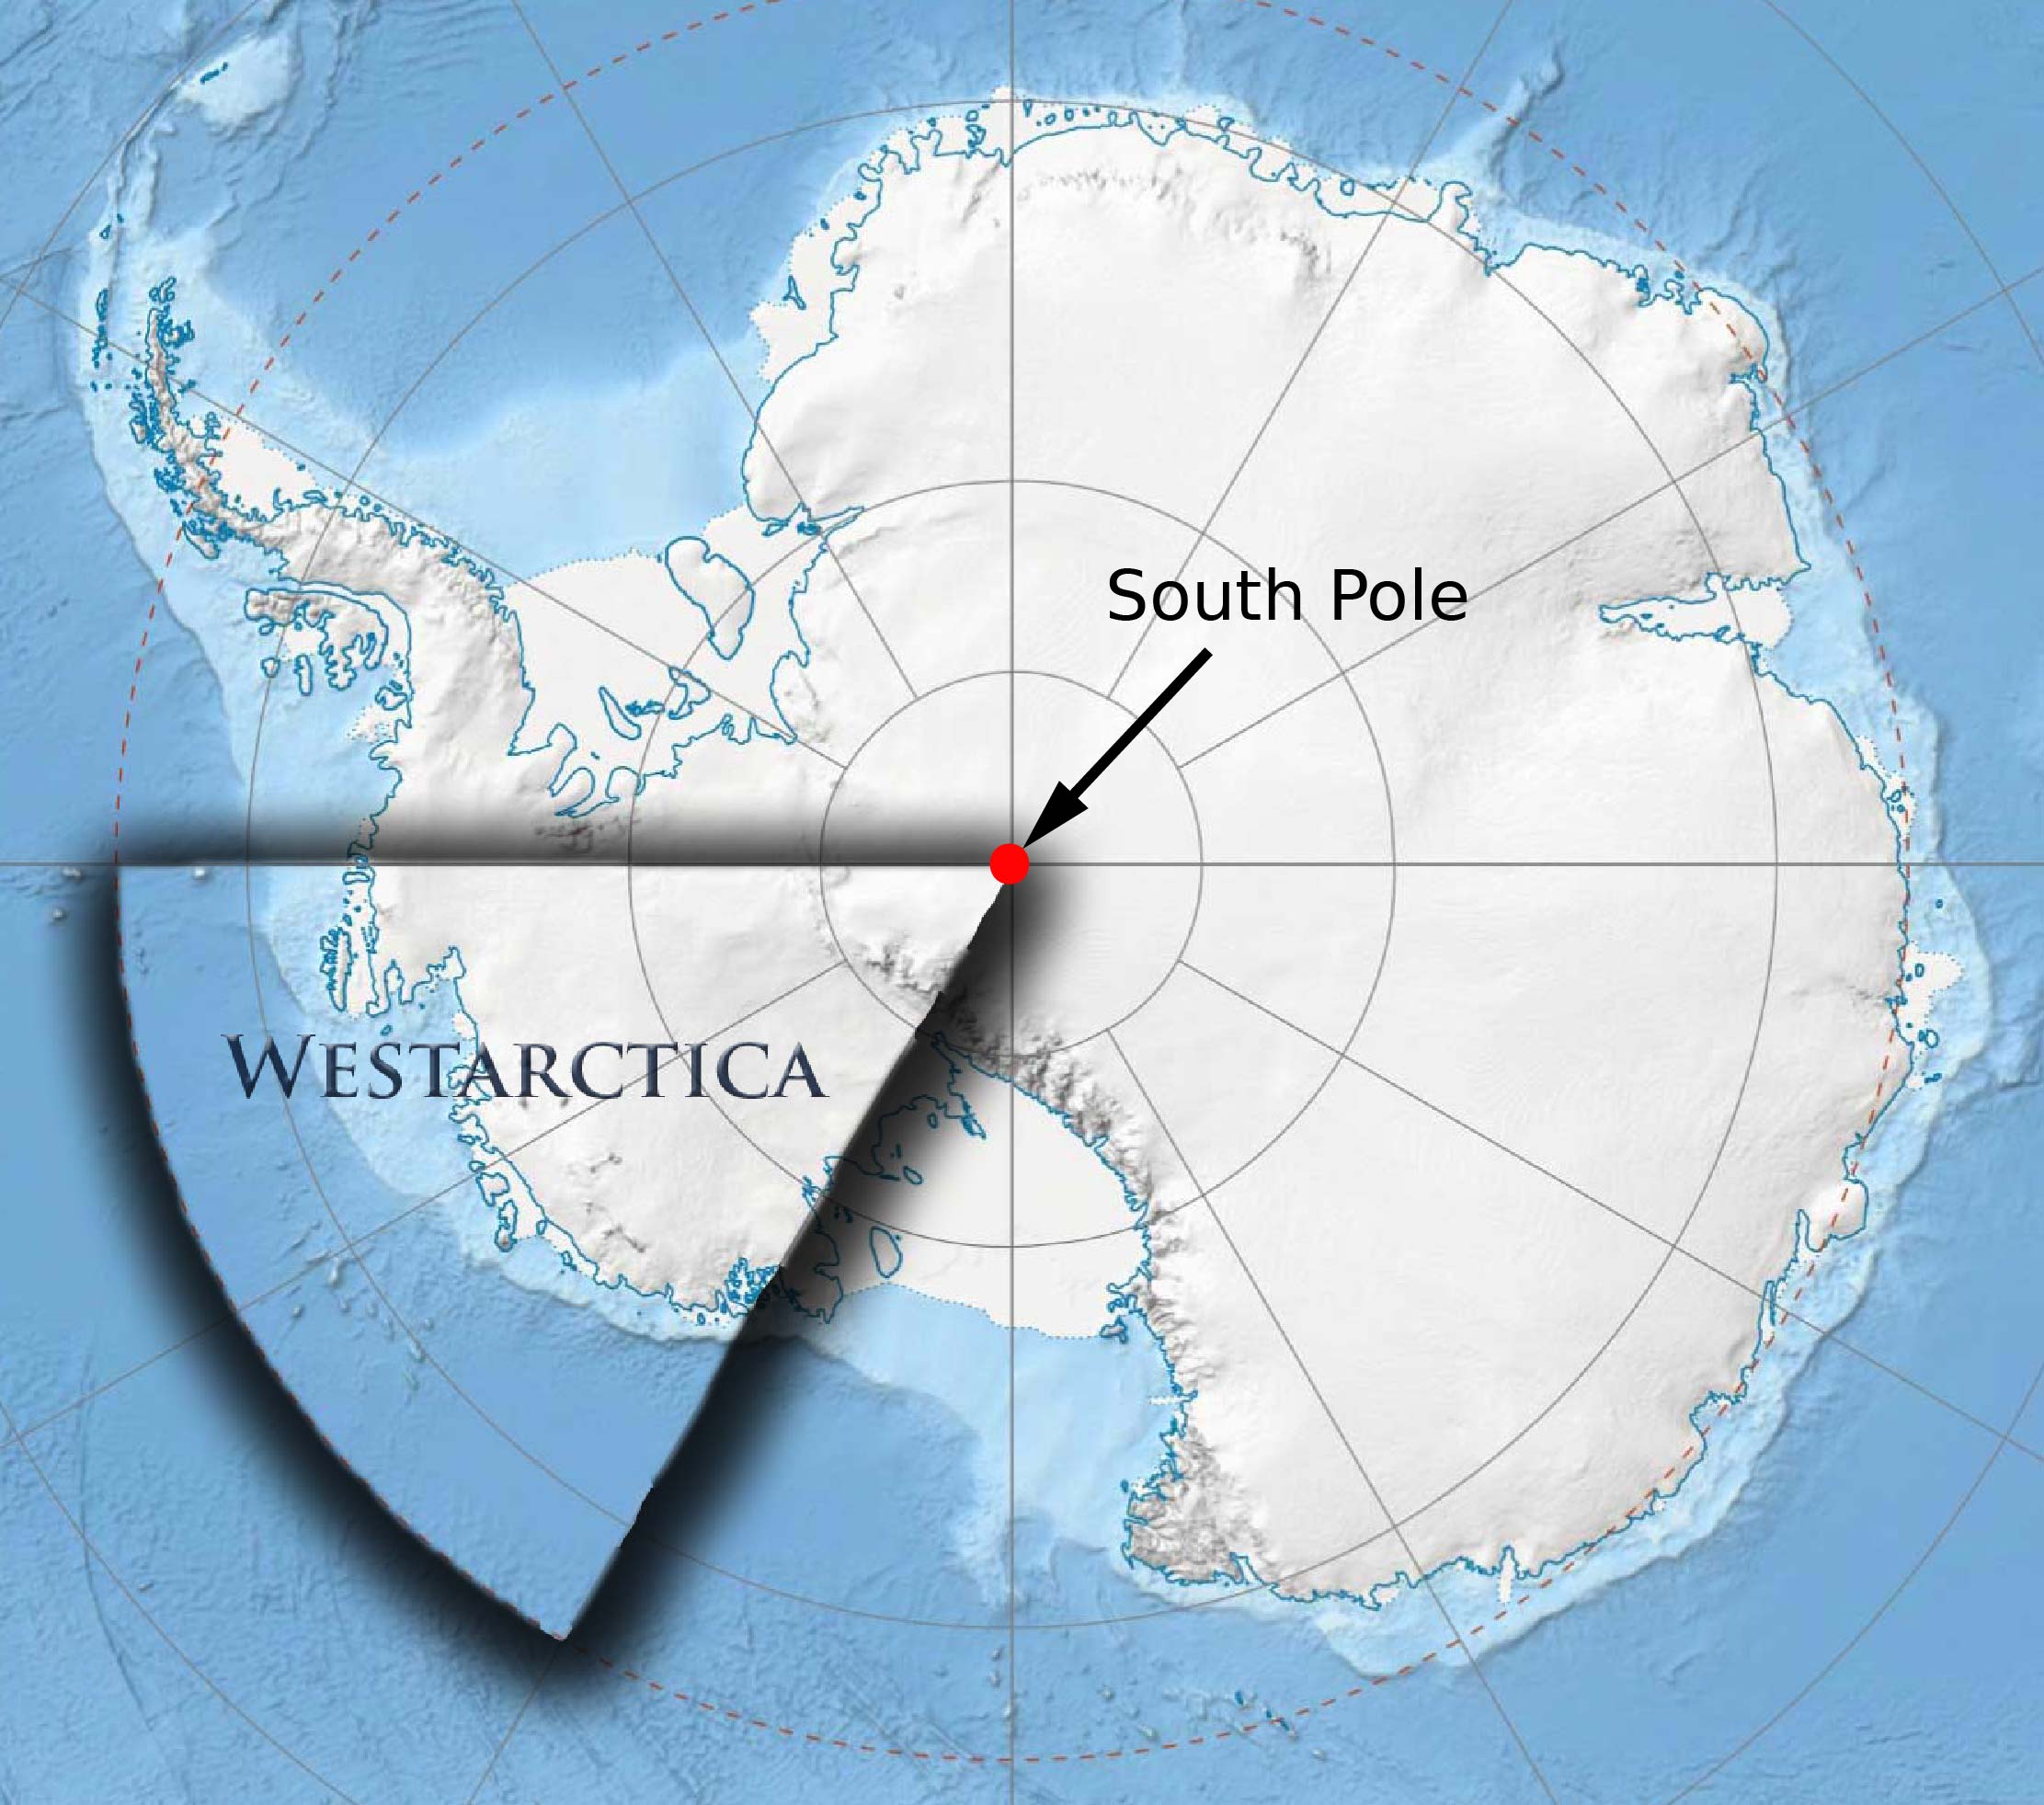 Westarctica Map w s pole.jpg